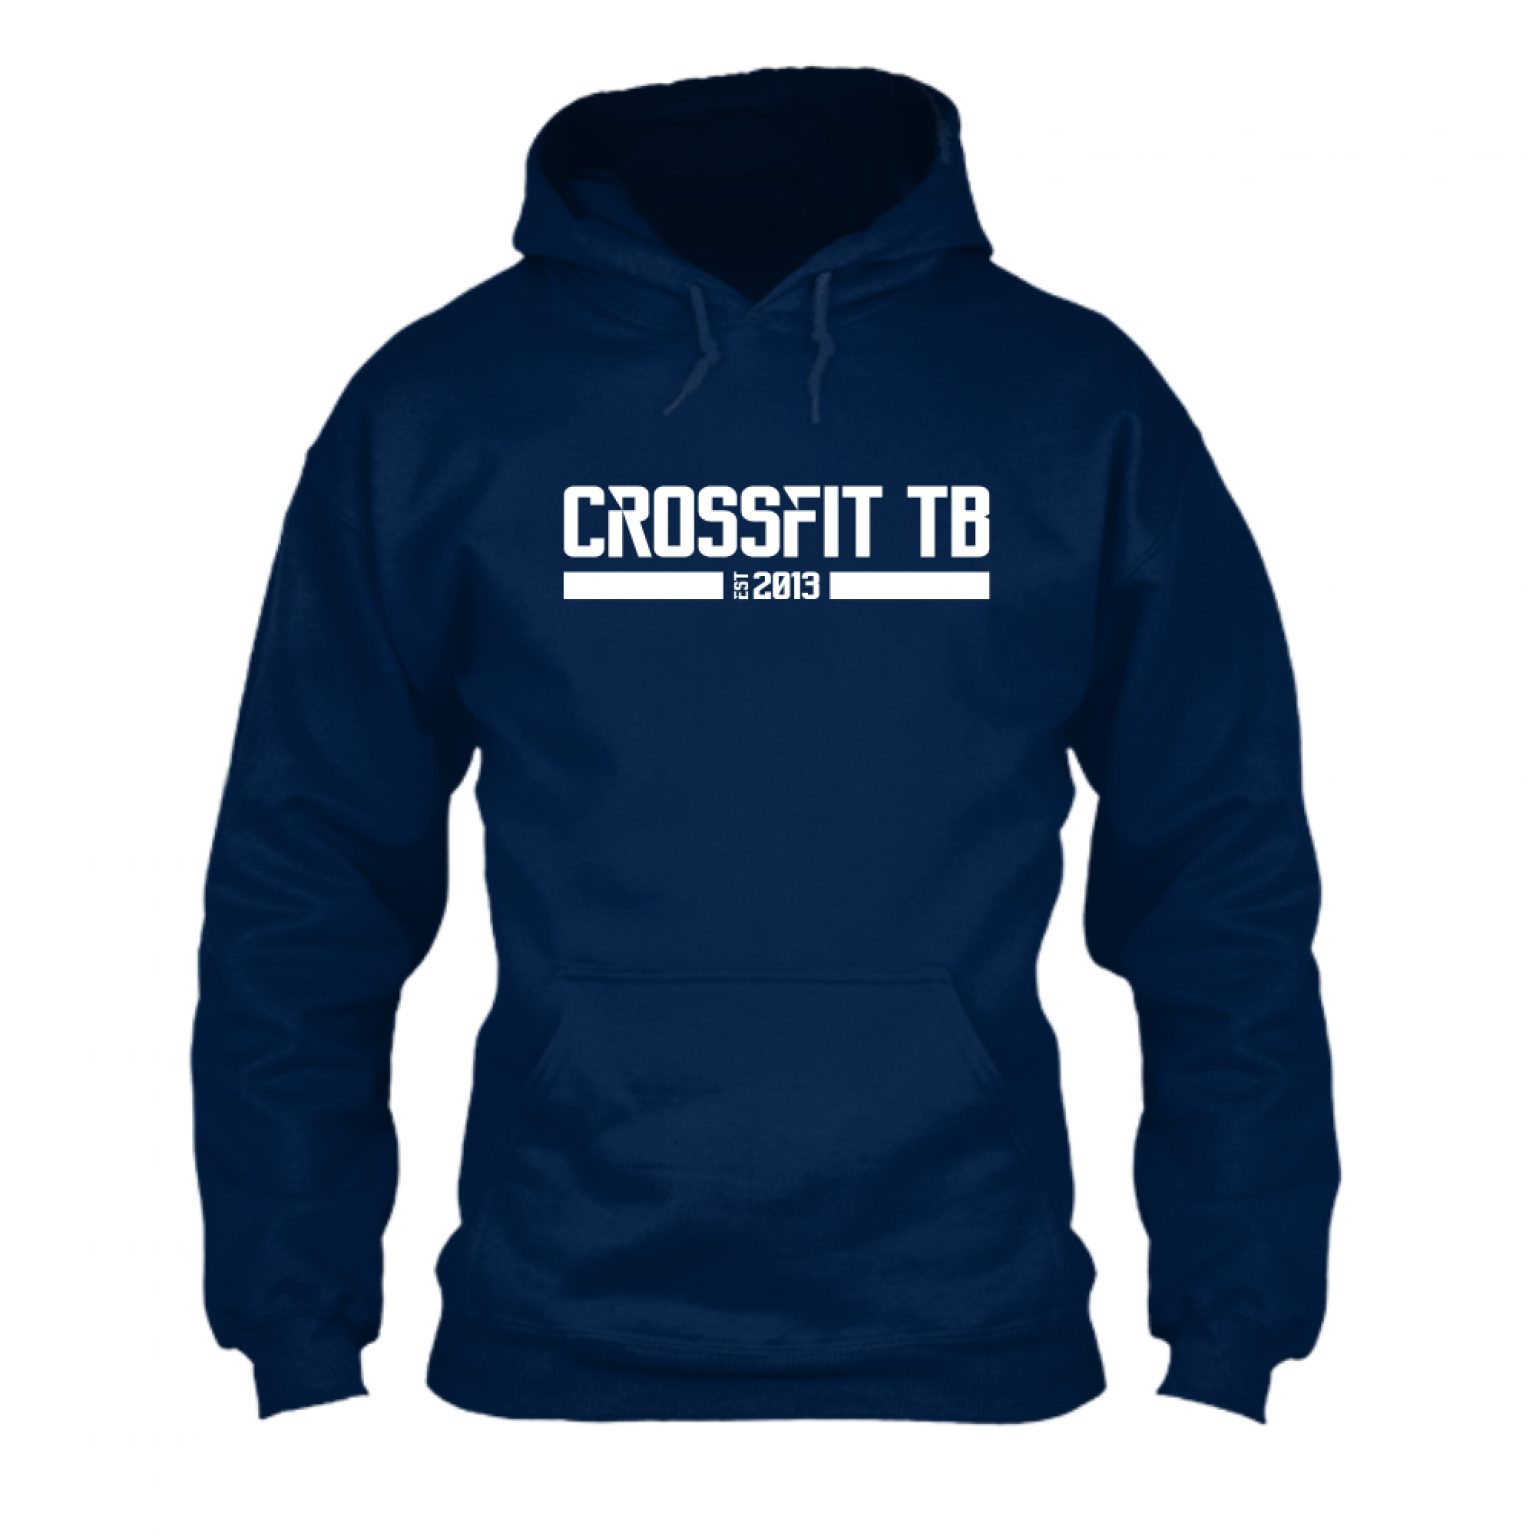 CrossFit TB Herren Hoodie Navy